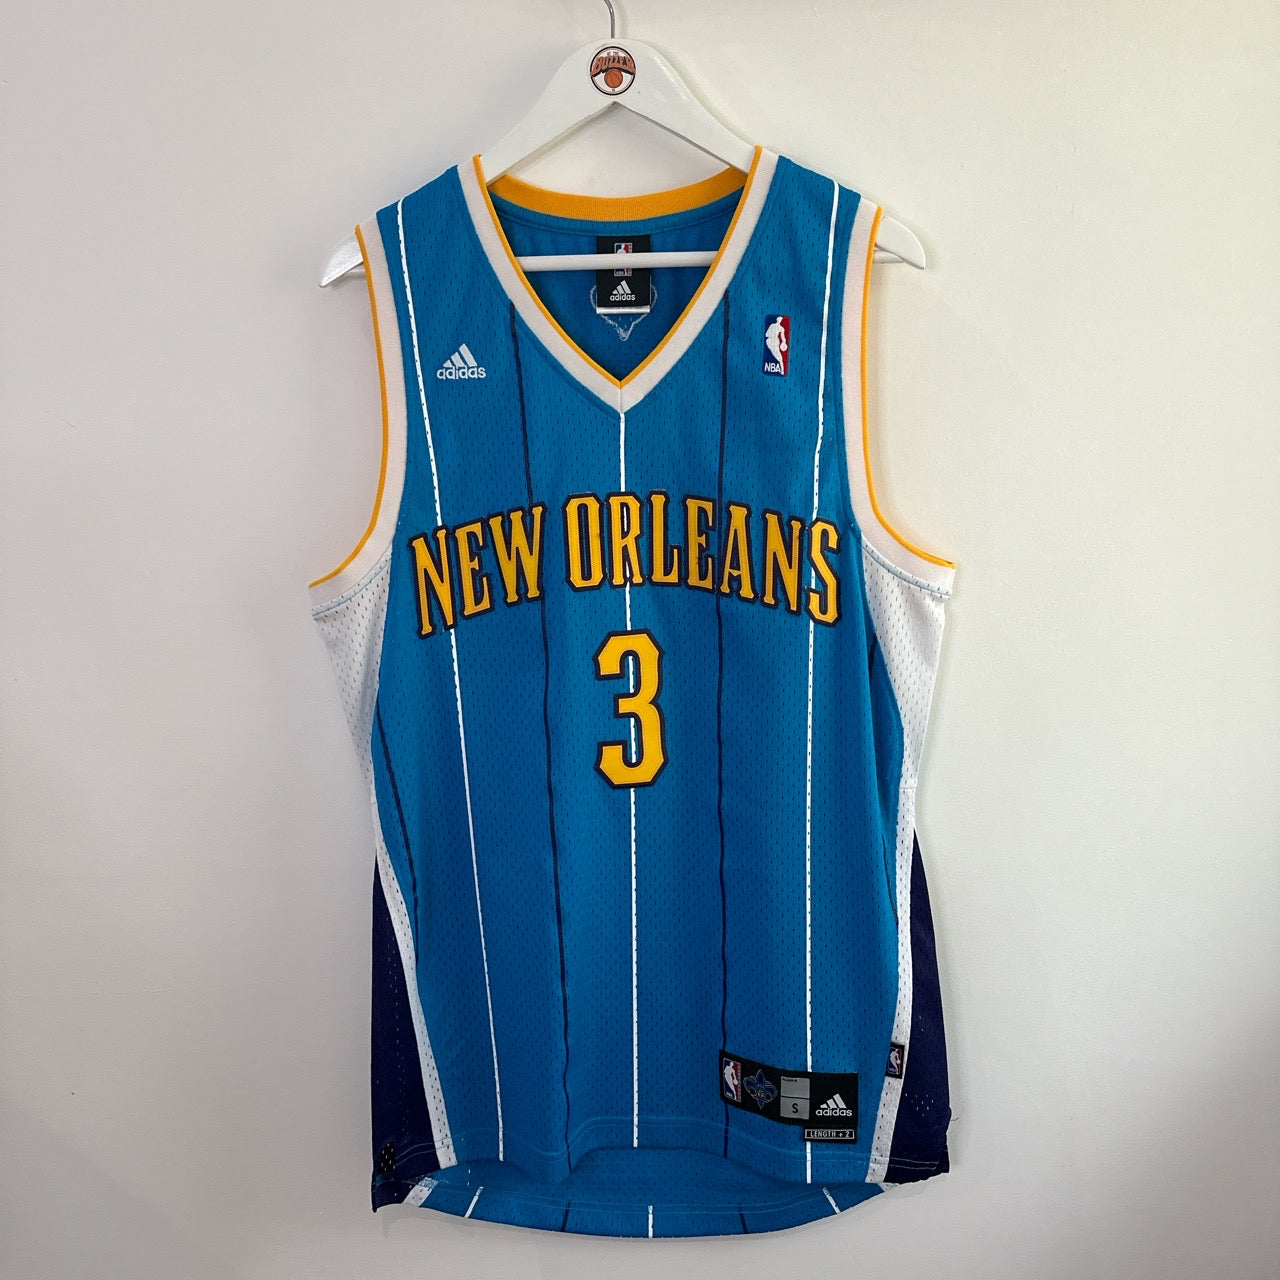 New Orleans Hornets Chris Paul Adidas swingman Jersey - Small (fits medium)